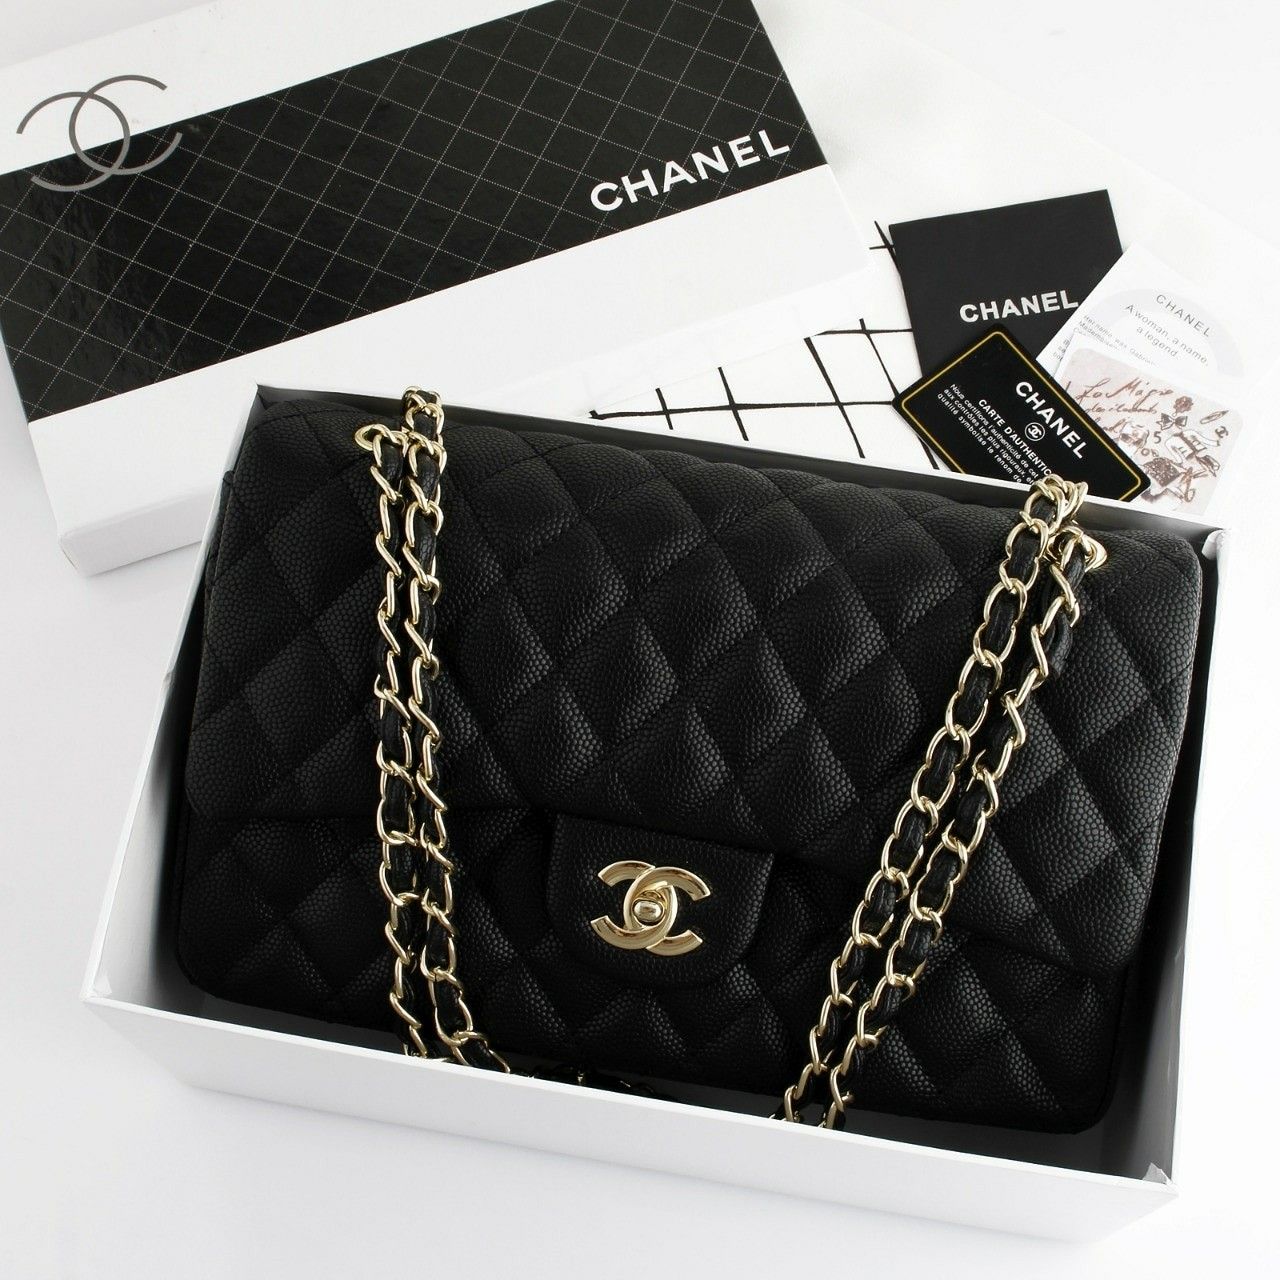 Chanel Handbag Care